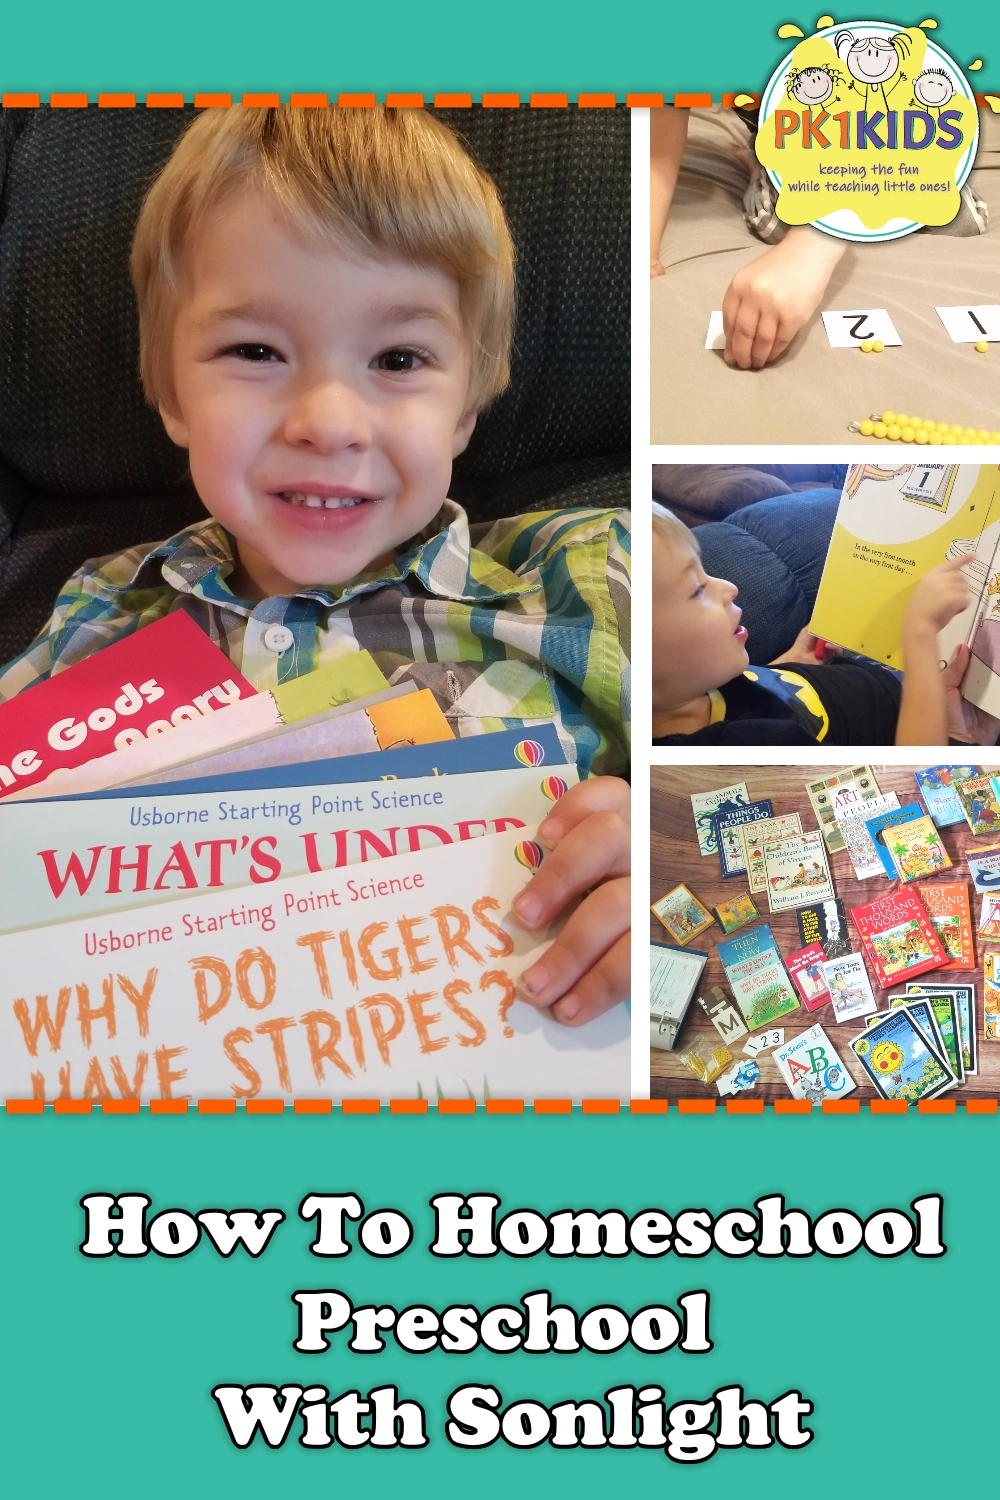 Sonlight's Pre-K Homeschool Curriculum